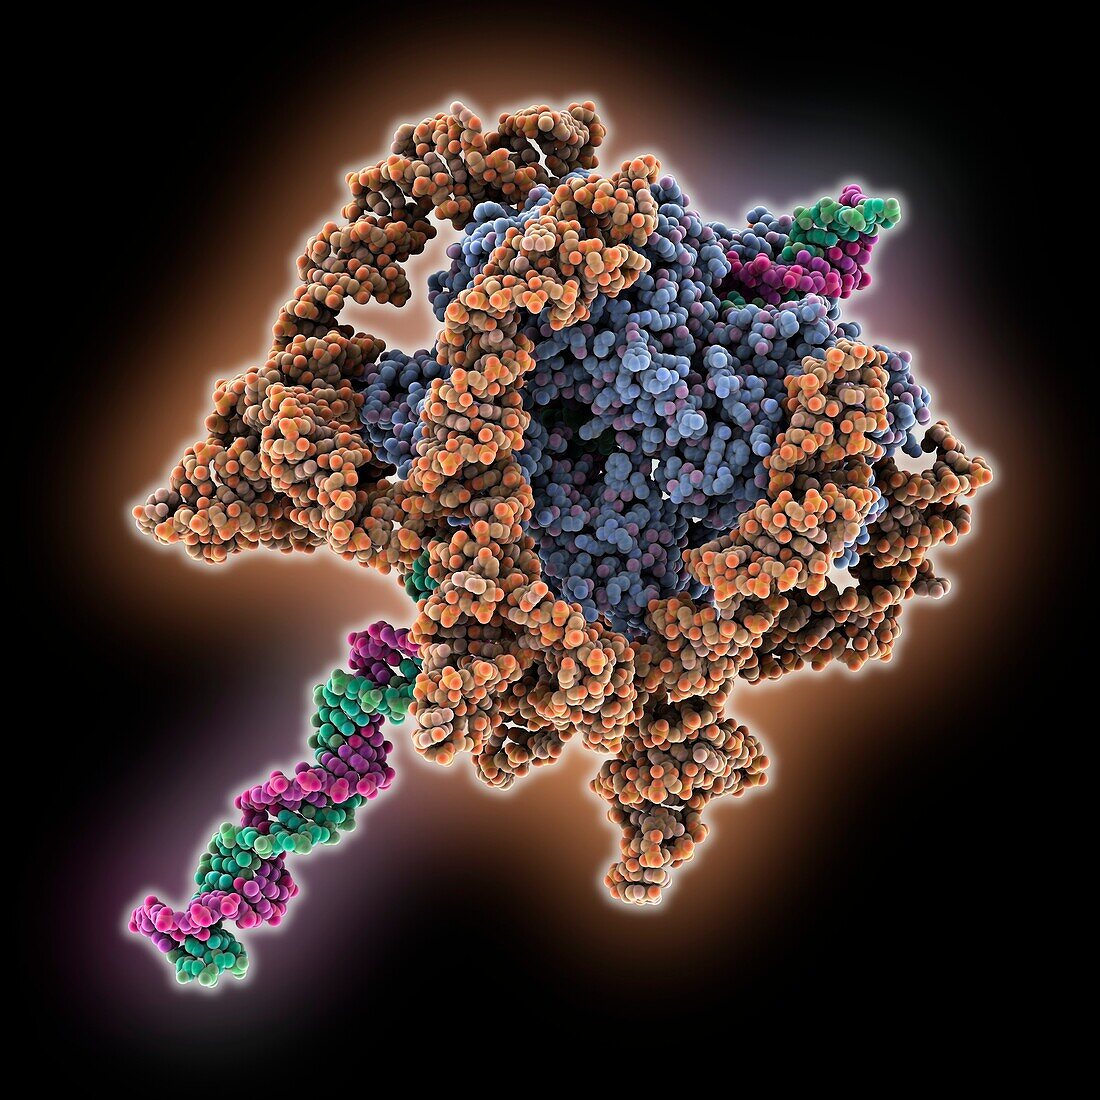 Bacteriophage Phi-29 viral genome, molecular model